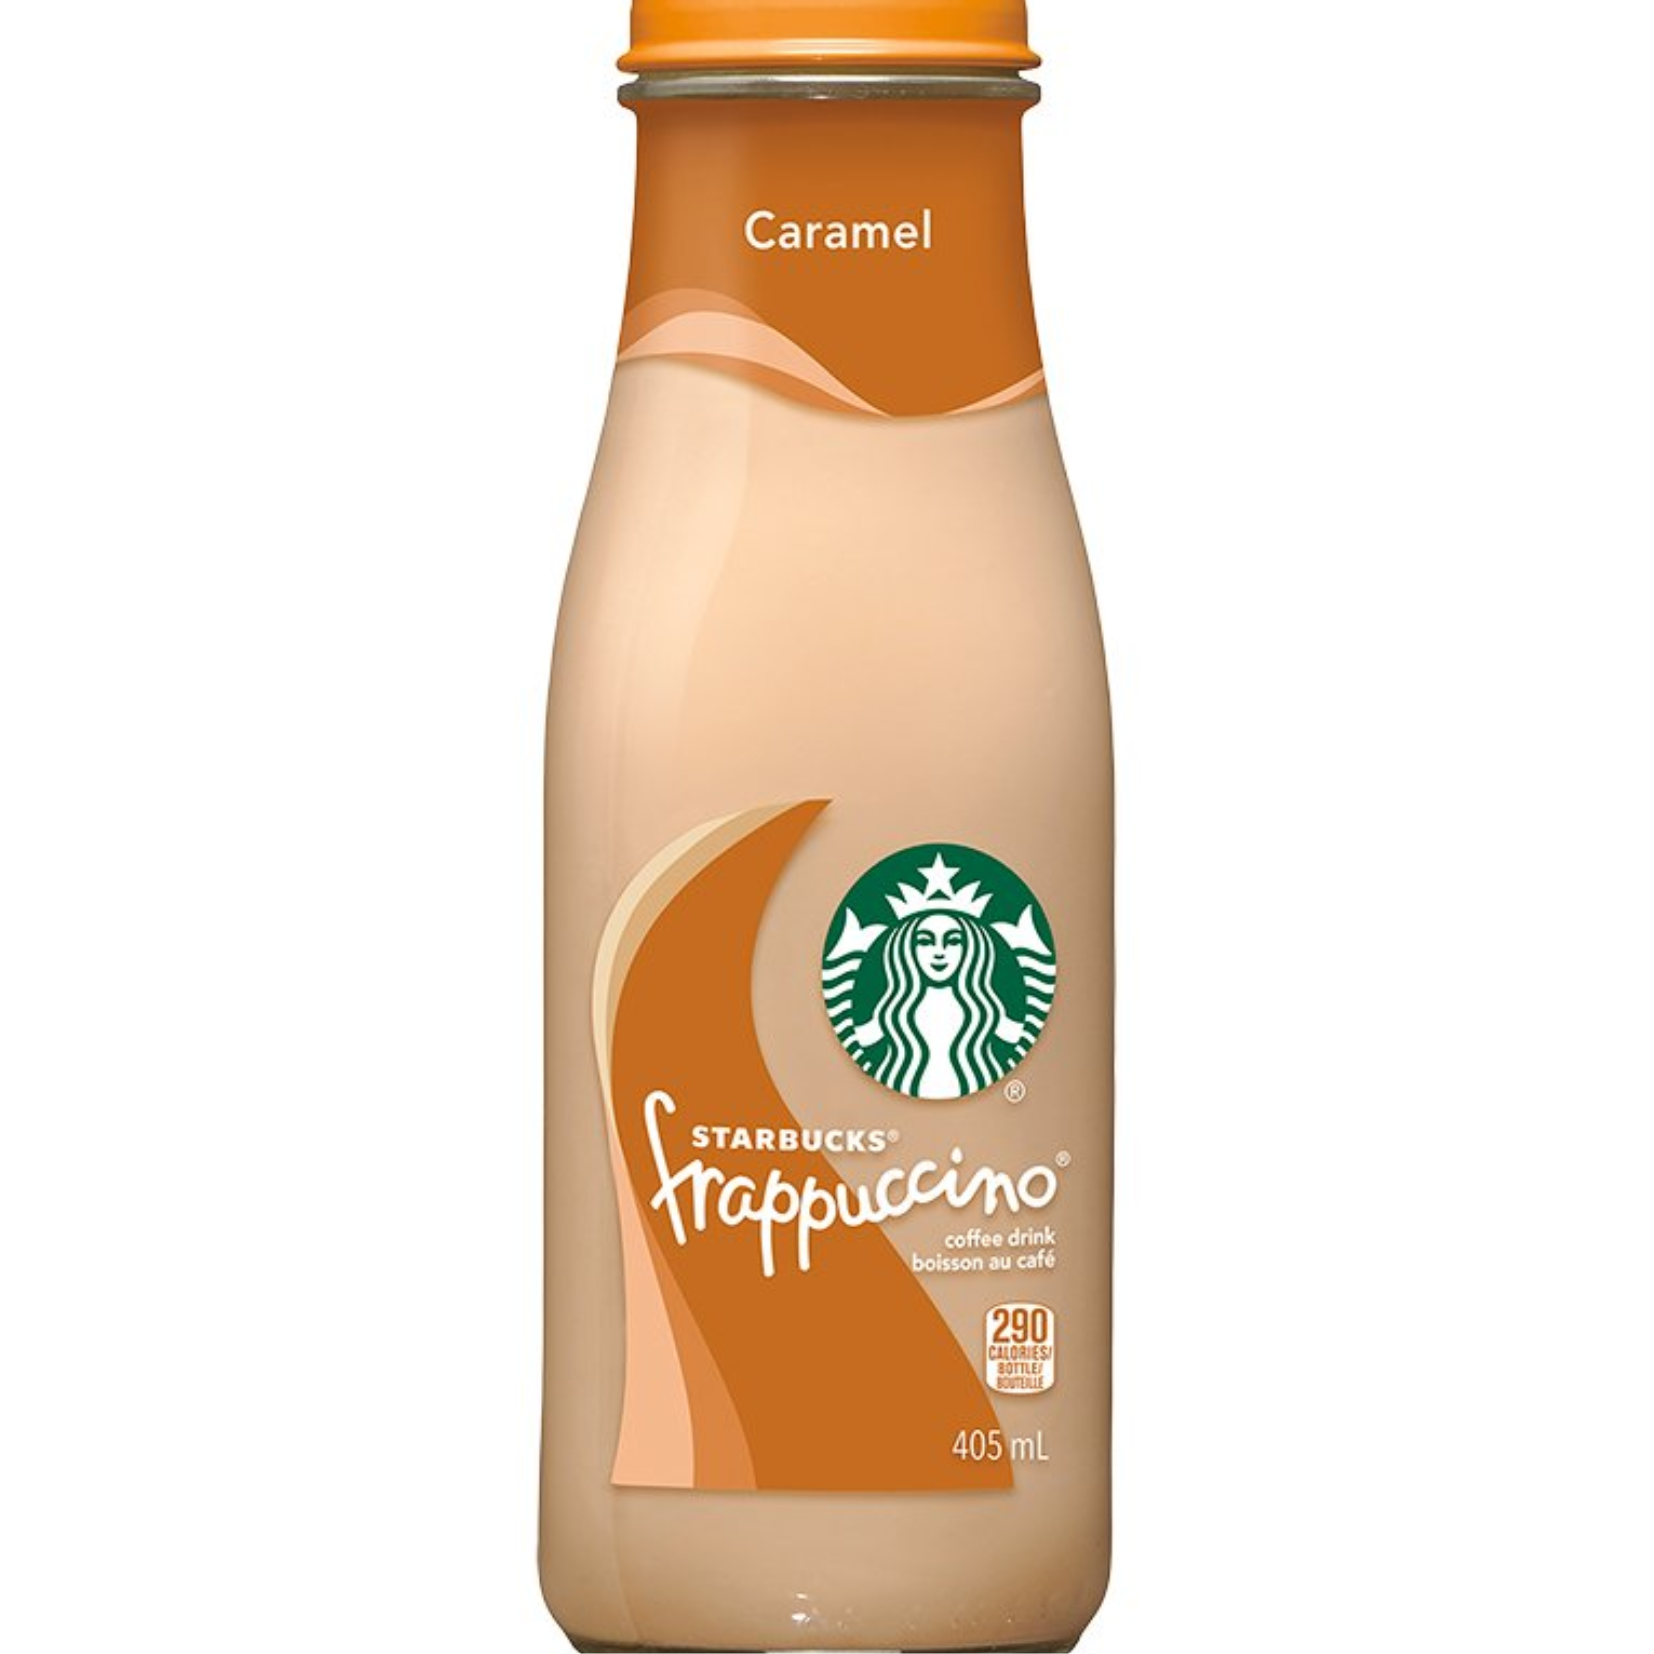 Starbucks Caramel Frappuccino Coffee Drink 405ml